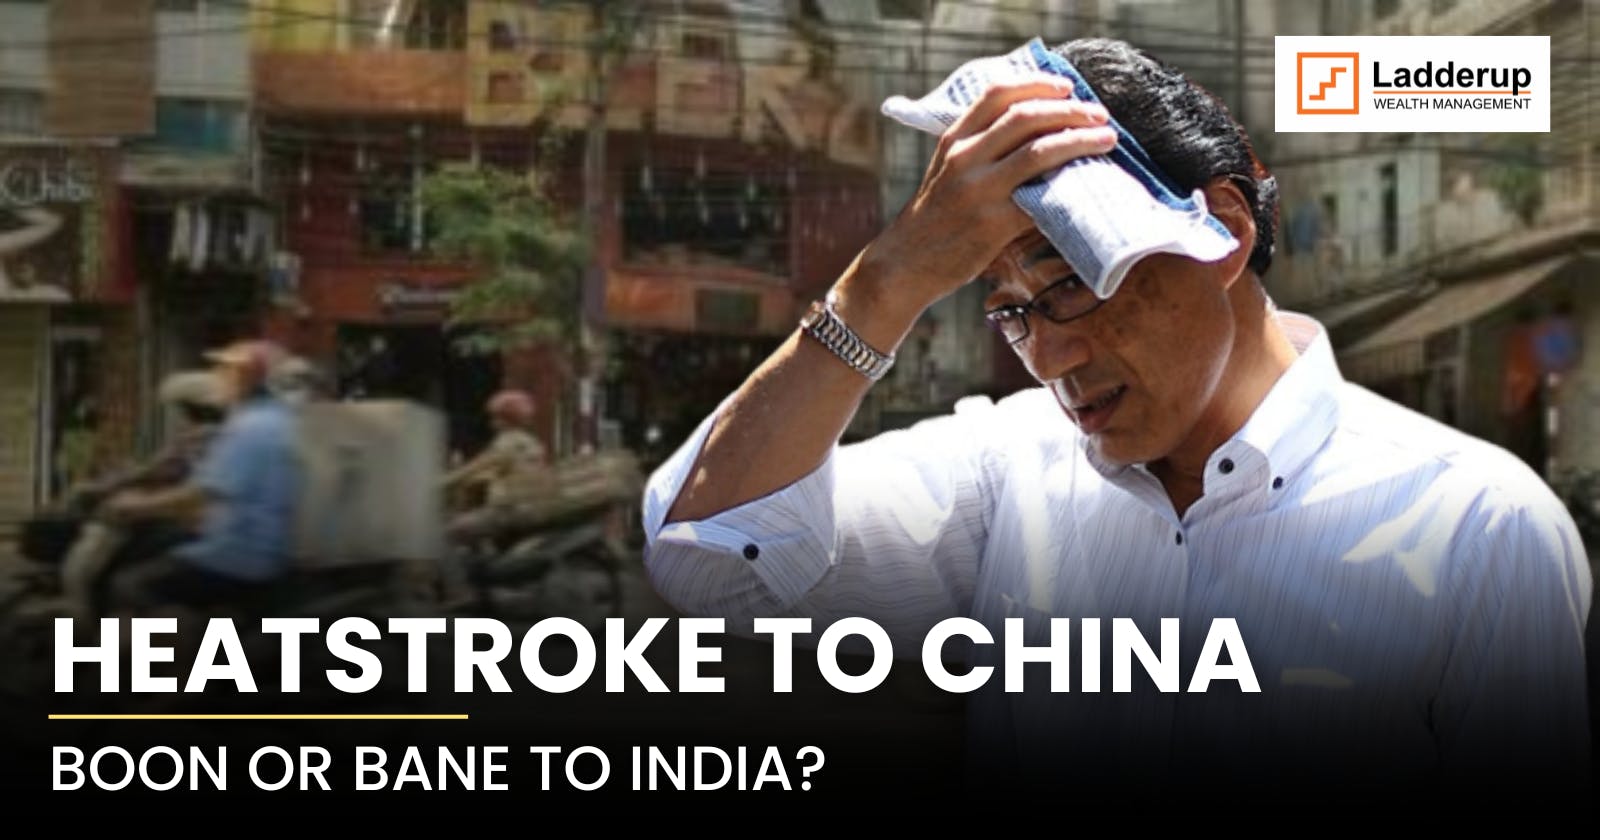 Heatstroke to China - Boon or Bane to India?